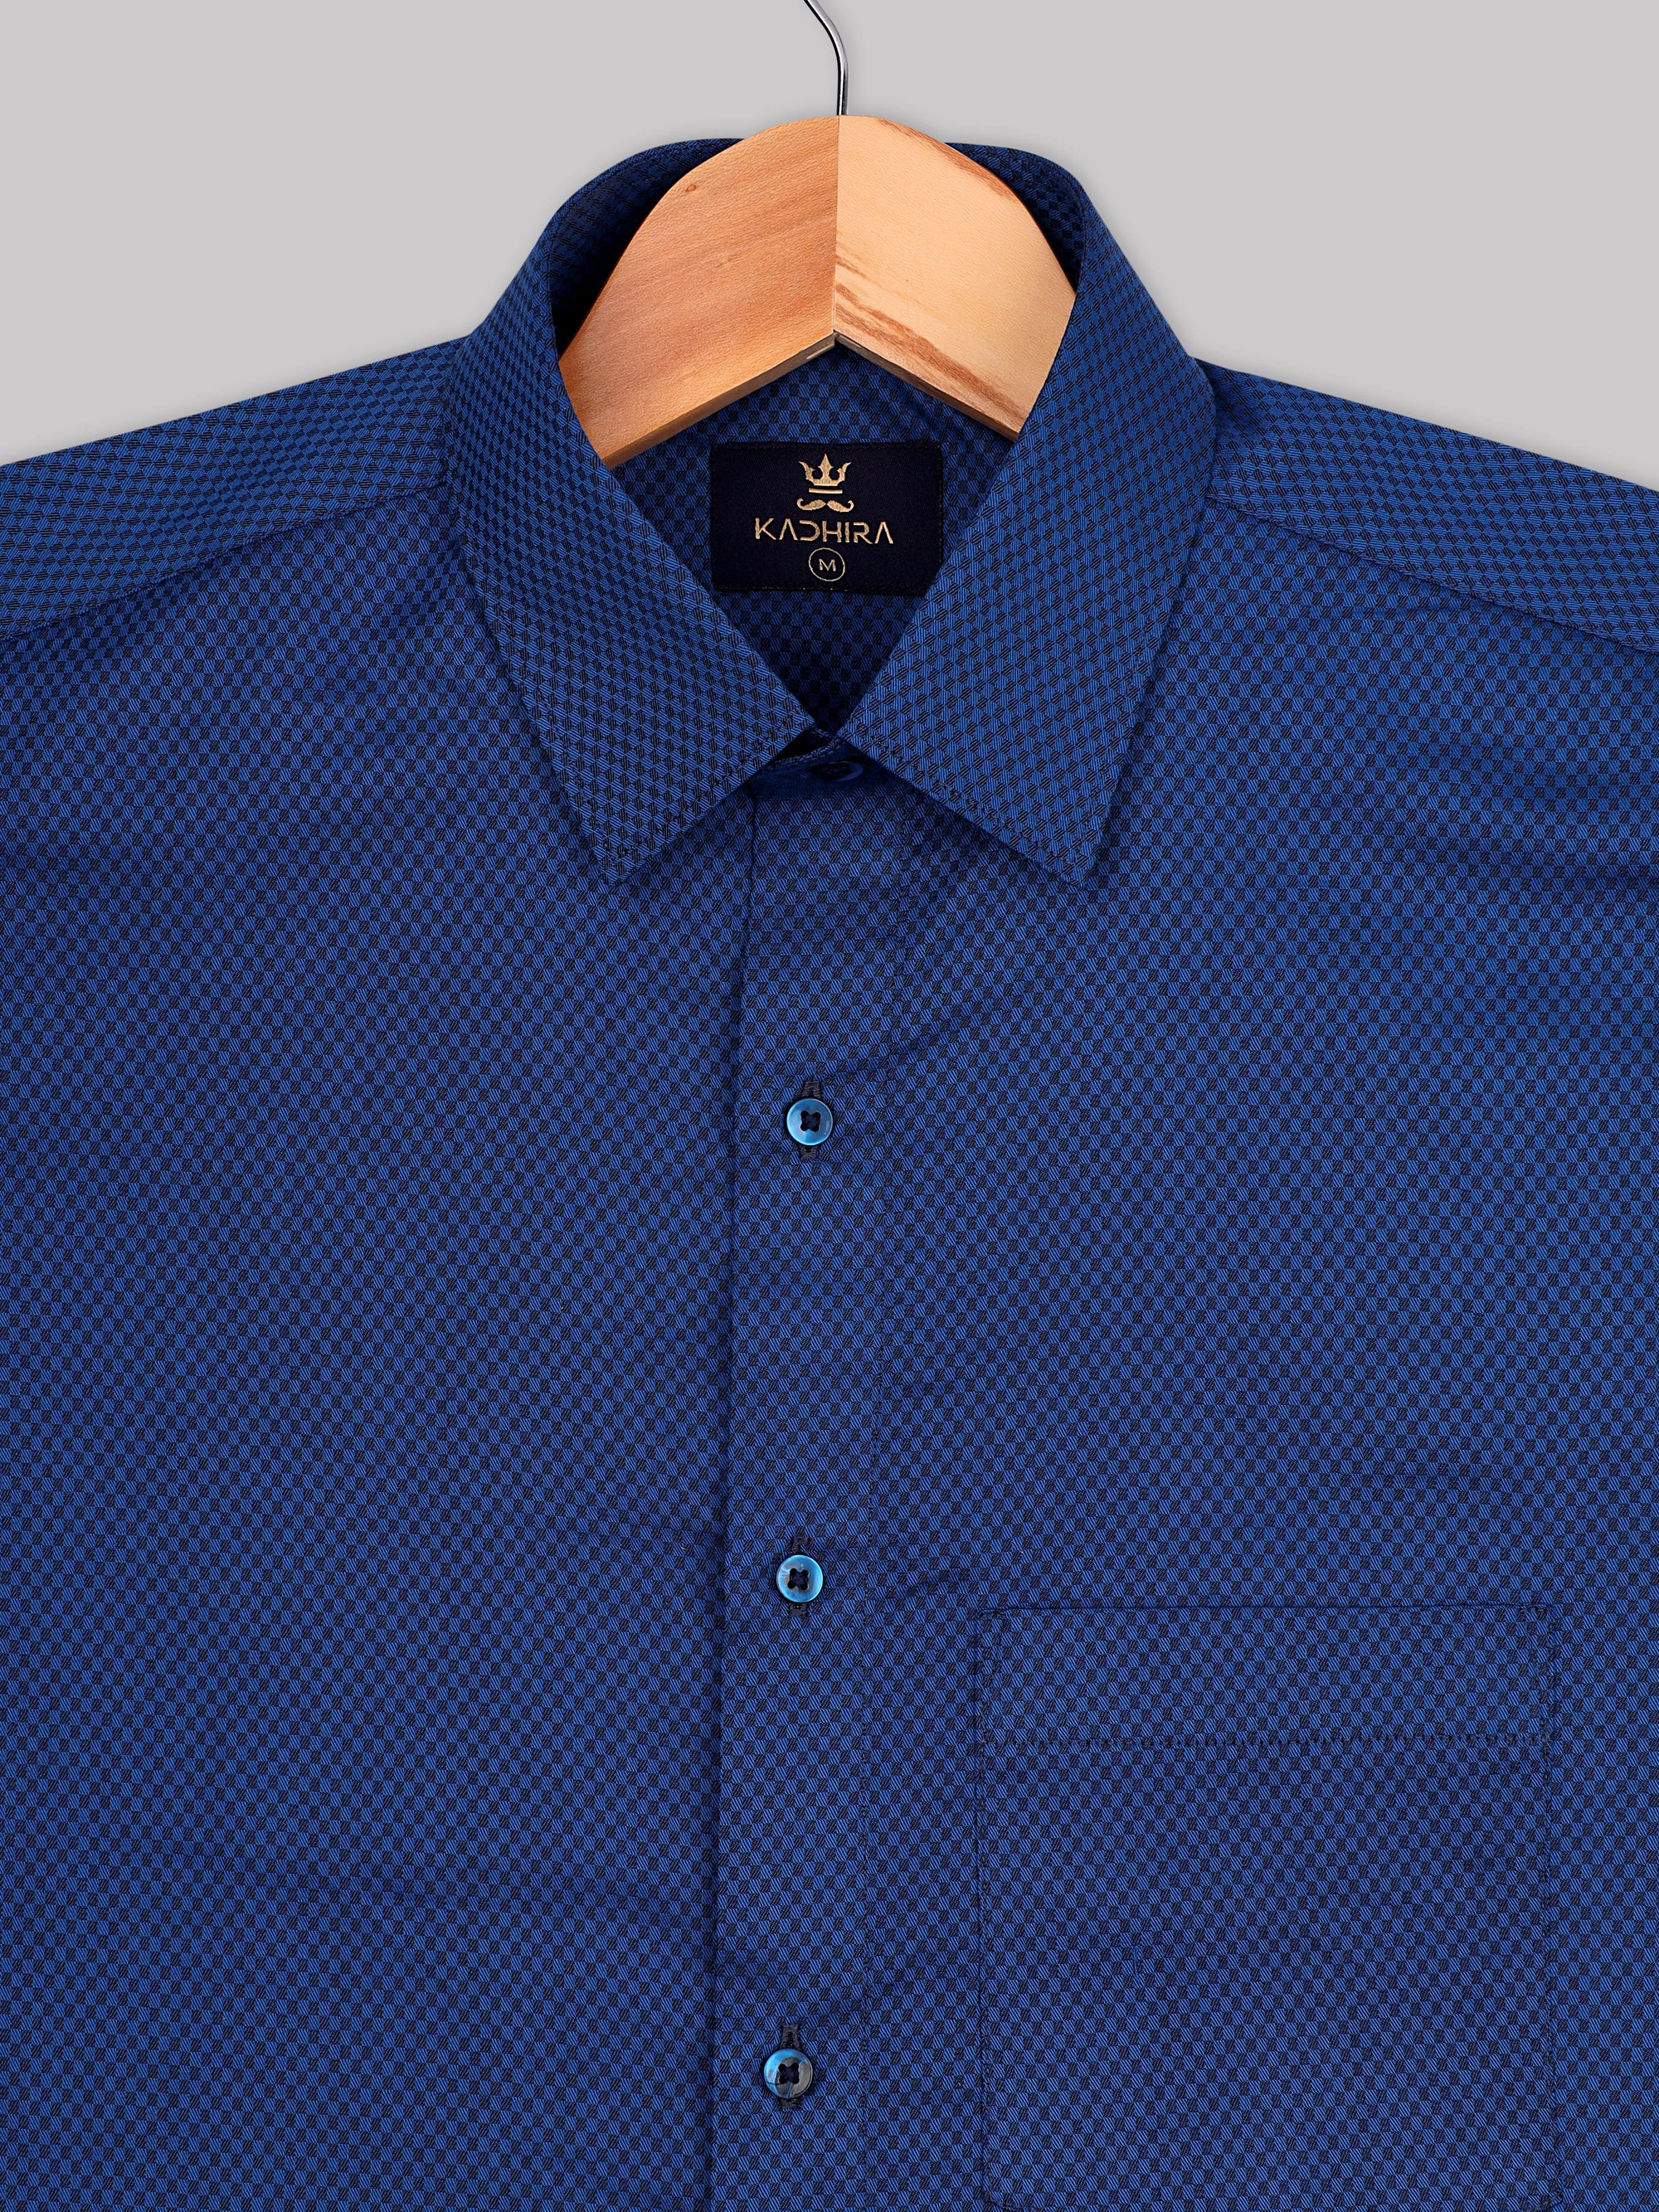 Yale Blue Dooby Textured Royal Jacquard Cotton Shirt